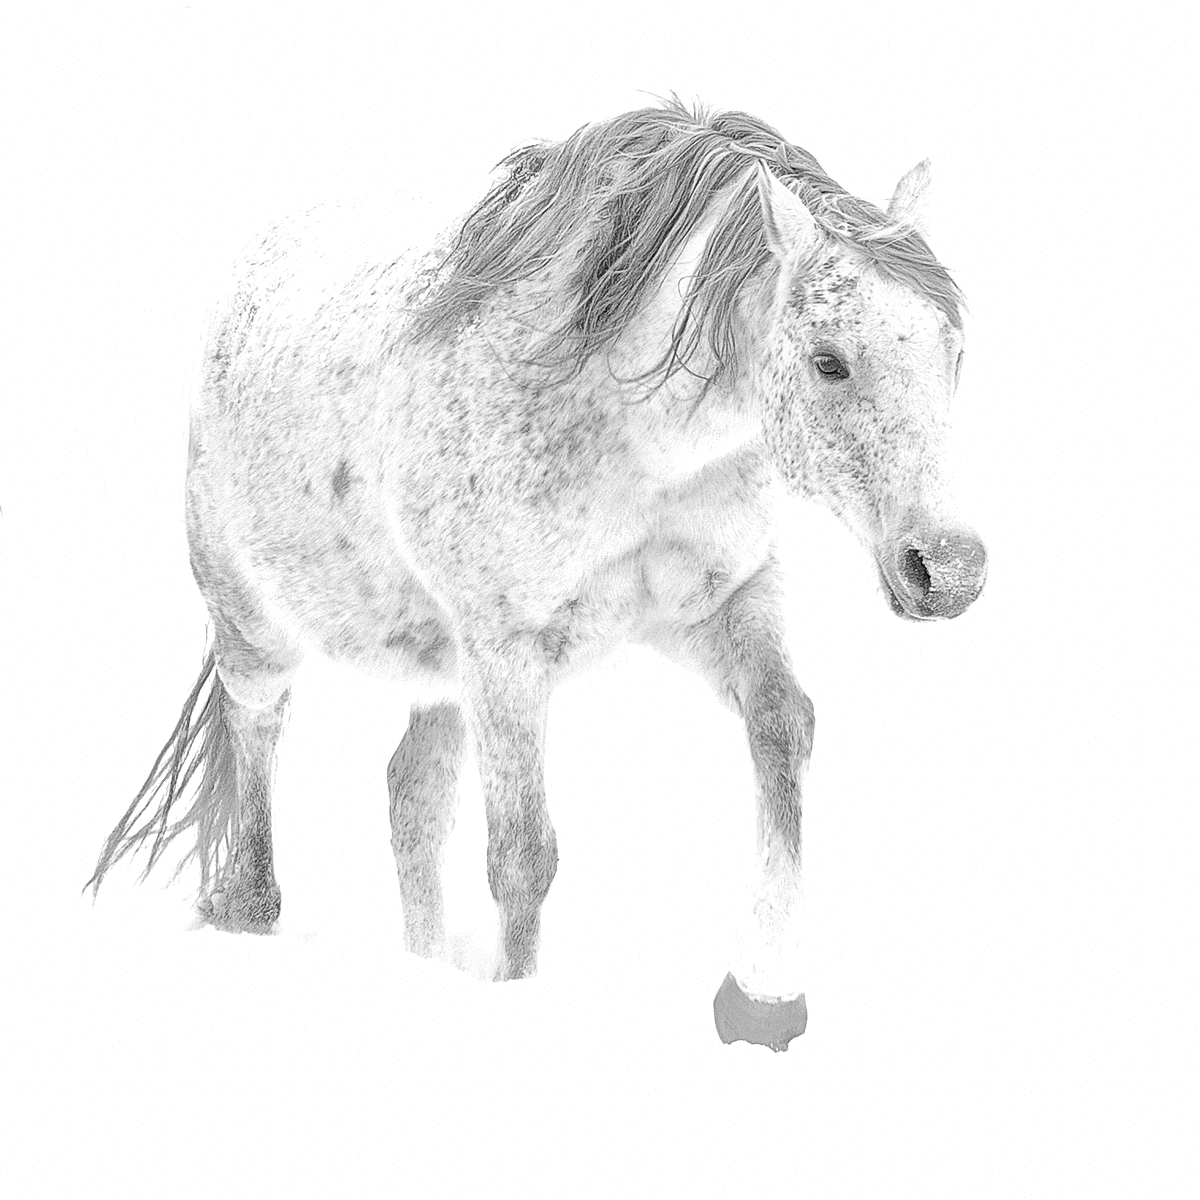 Snow pony